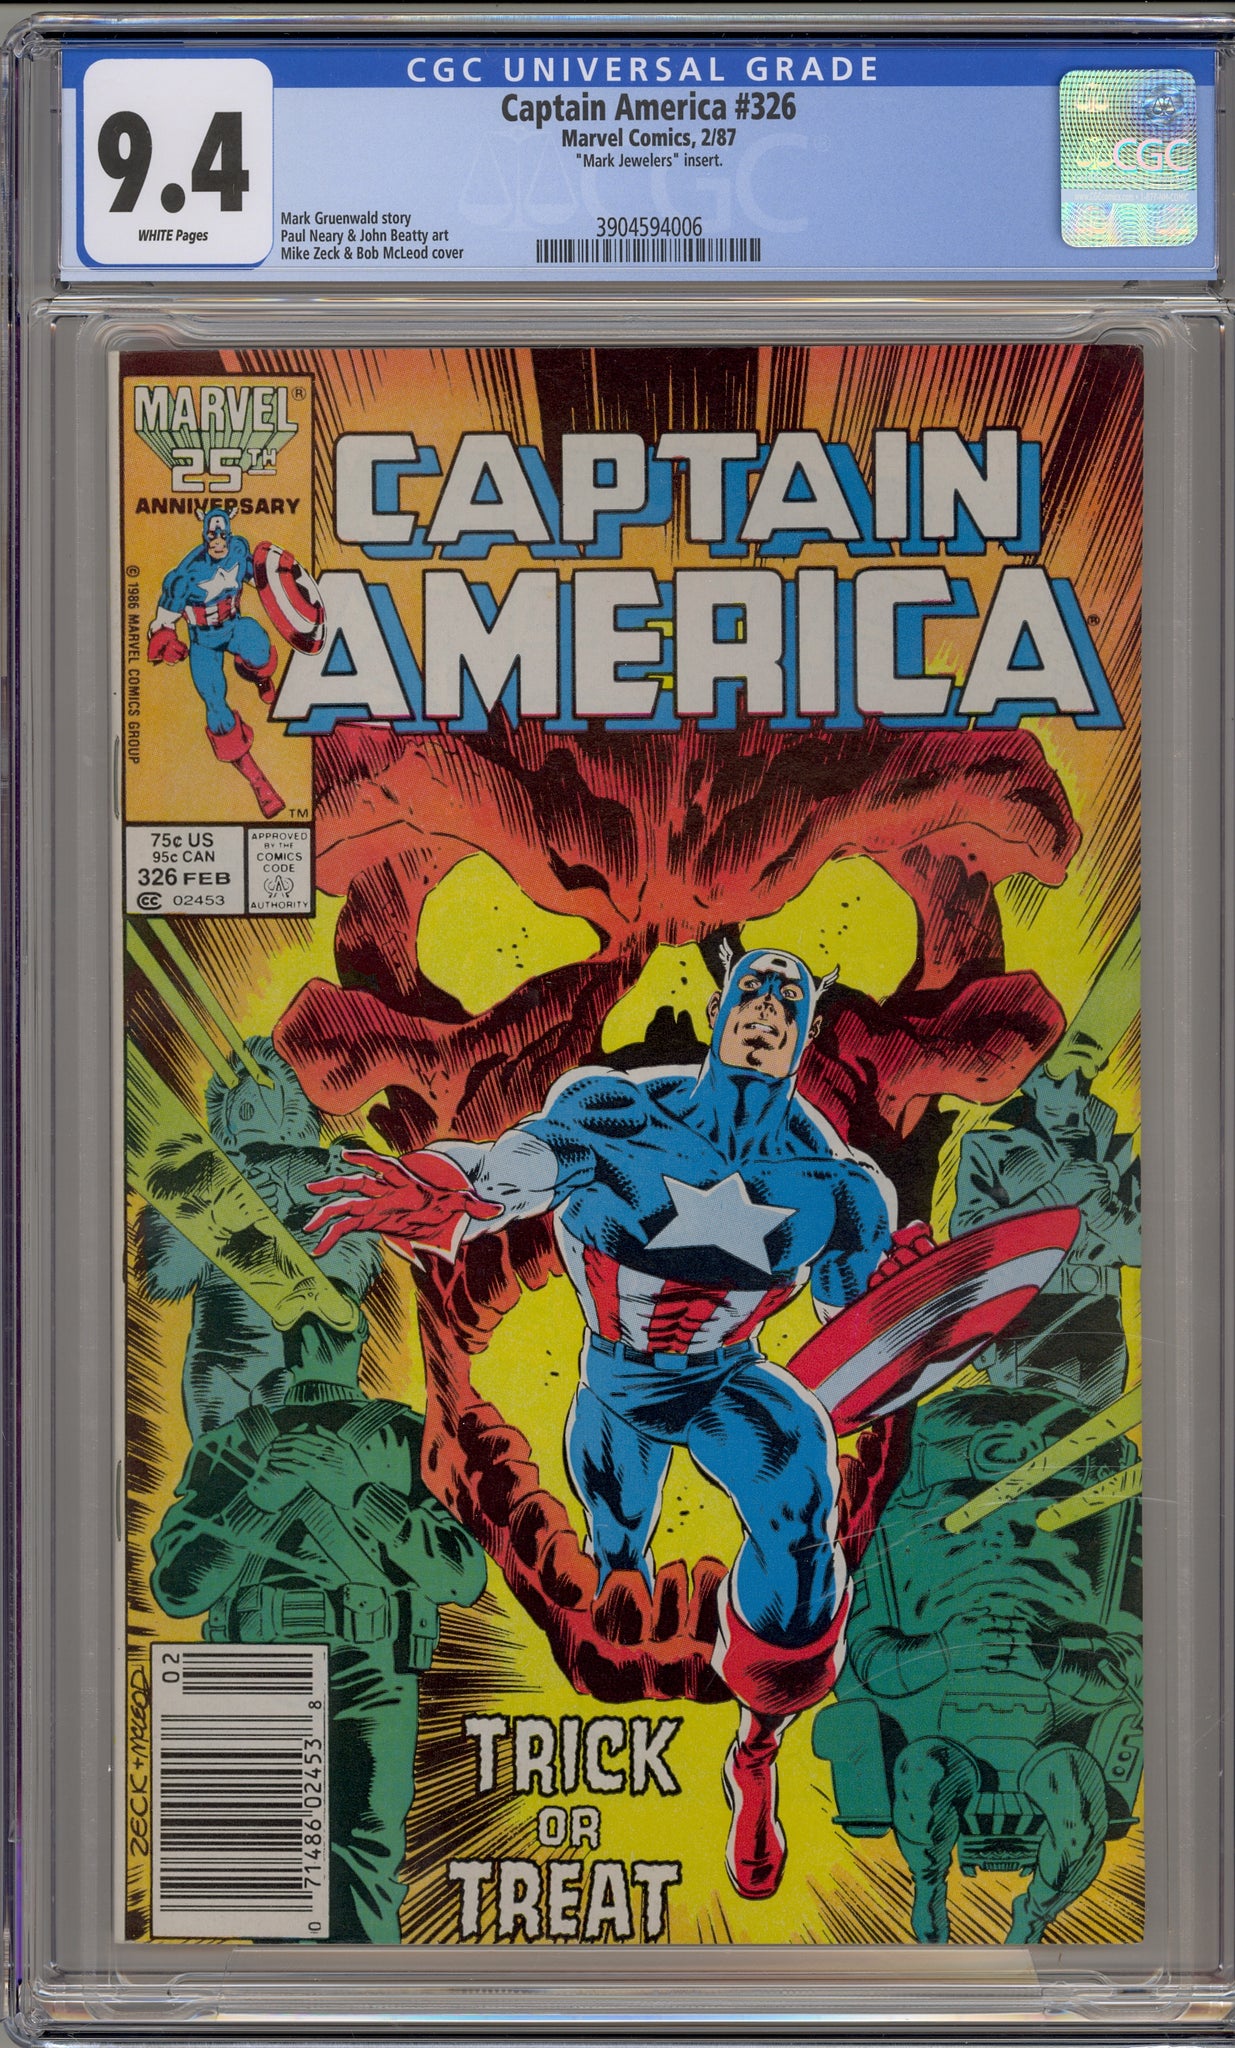 Captain America #326 (1987) Mark Jewelers newsstand variant - Dr. Faustus, Red Skull